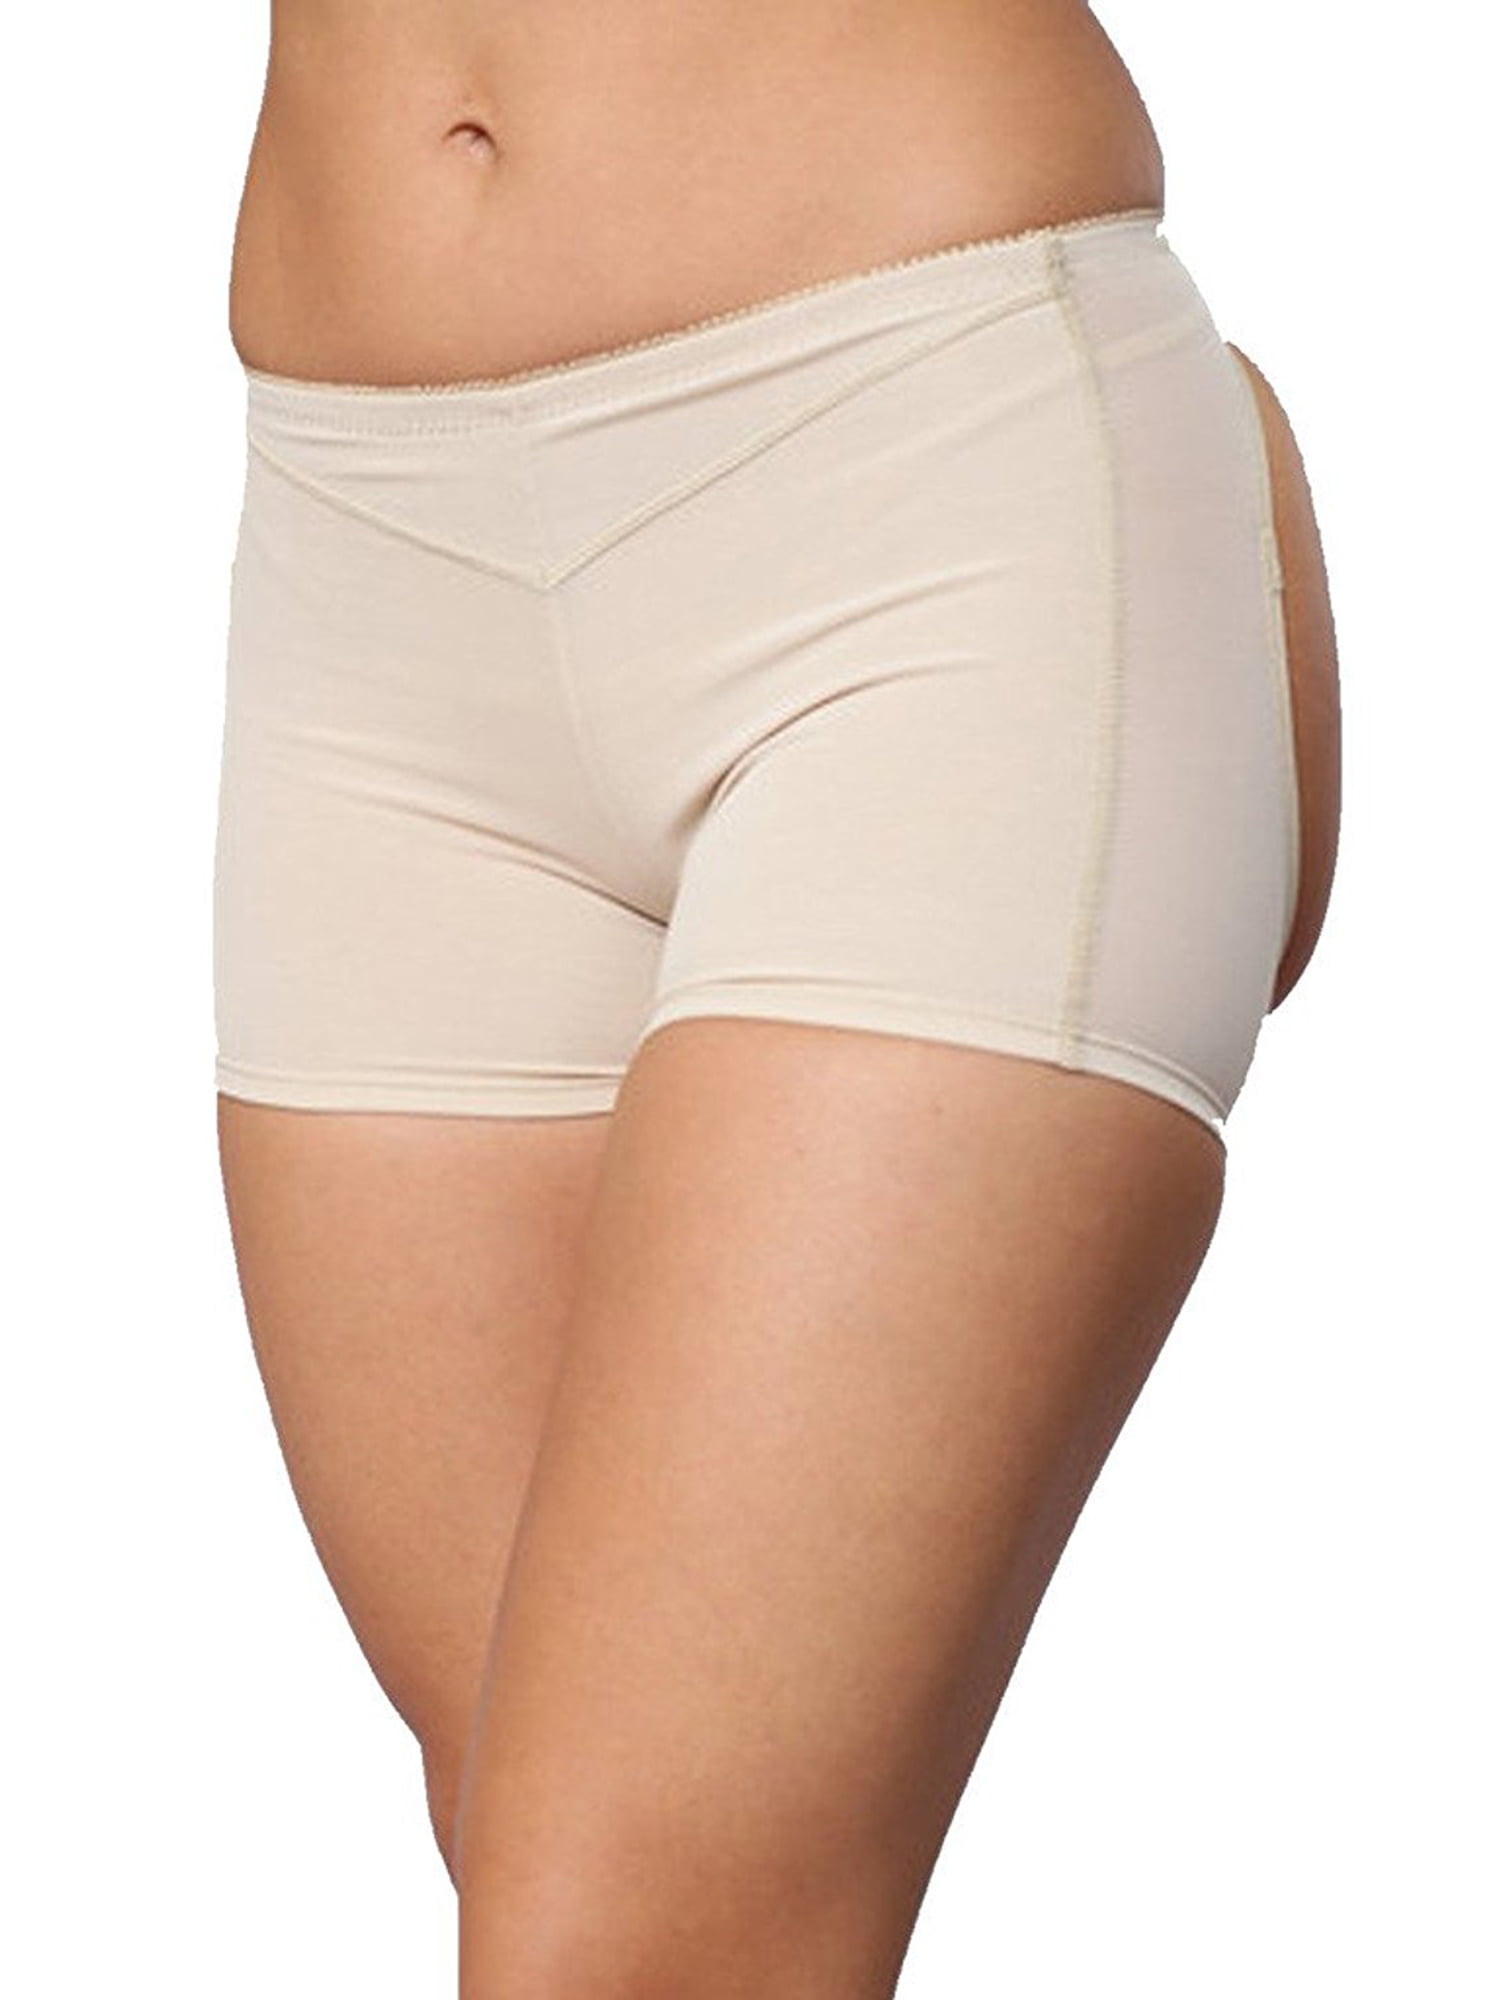 Asotony Women's U-Shape Lace Full Body Shaper | Bust, Waist & Hips Control  | Available in M-XXXL